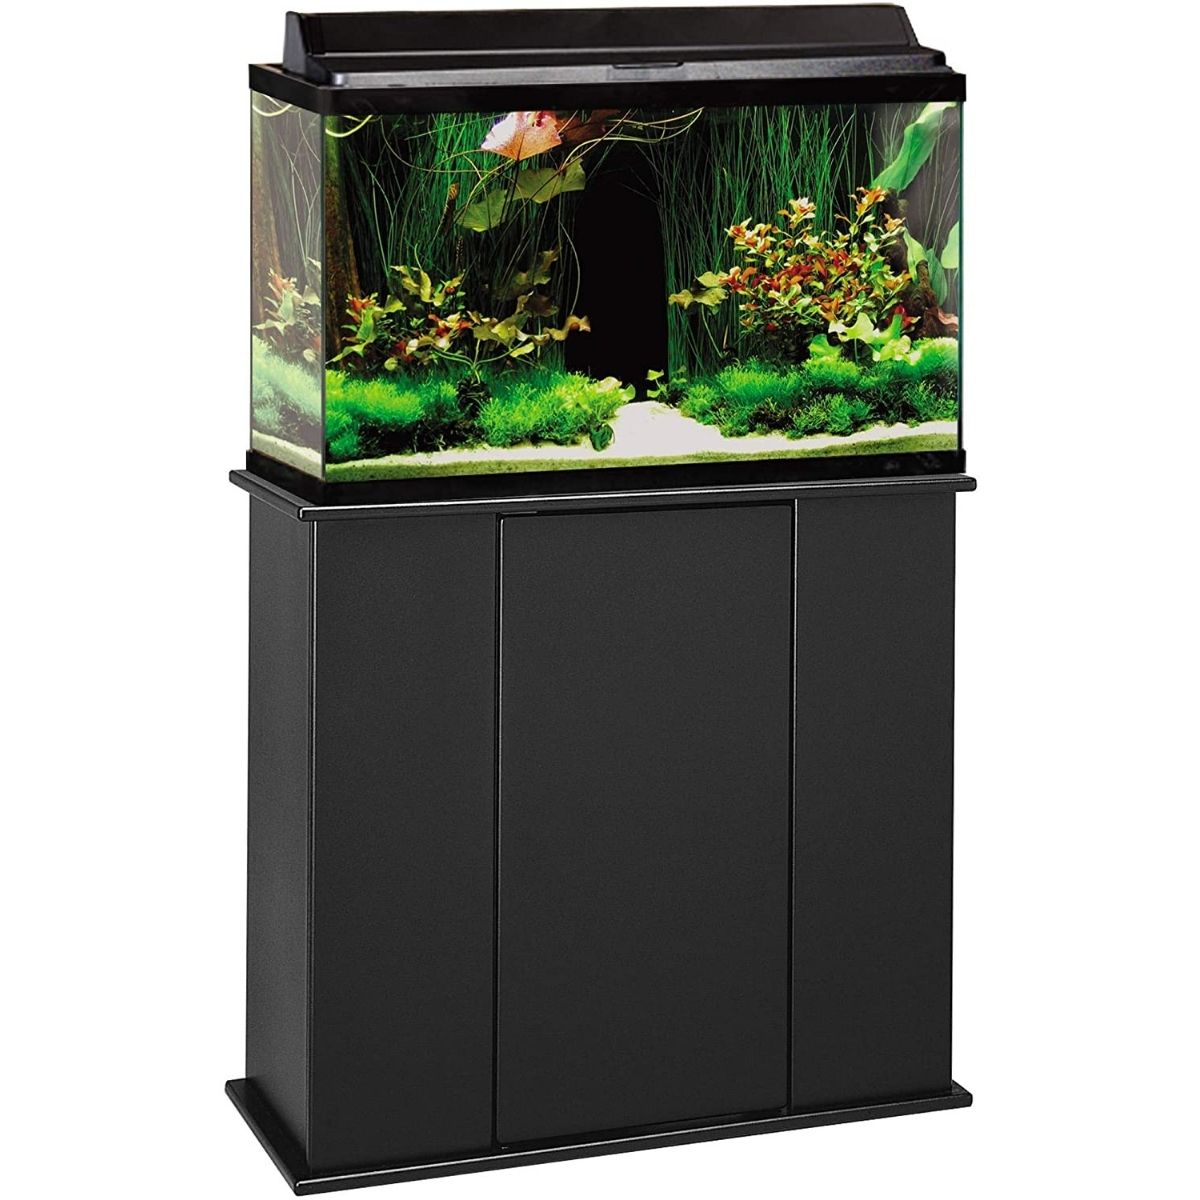 The Best 20 Gallon Fish Tank Stand Option: Aquatic Fundamentals Wood Aquarium Stand